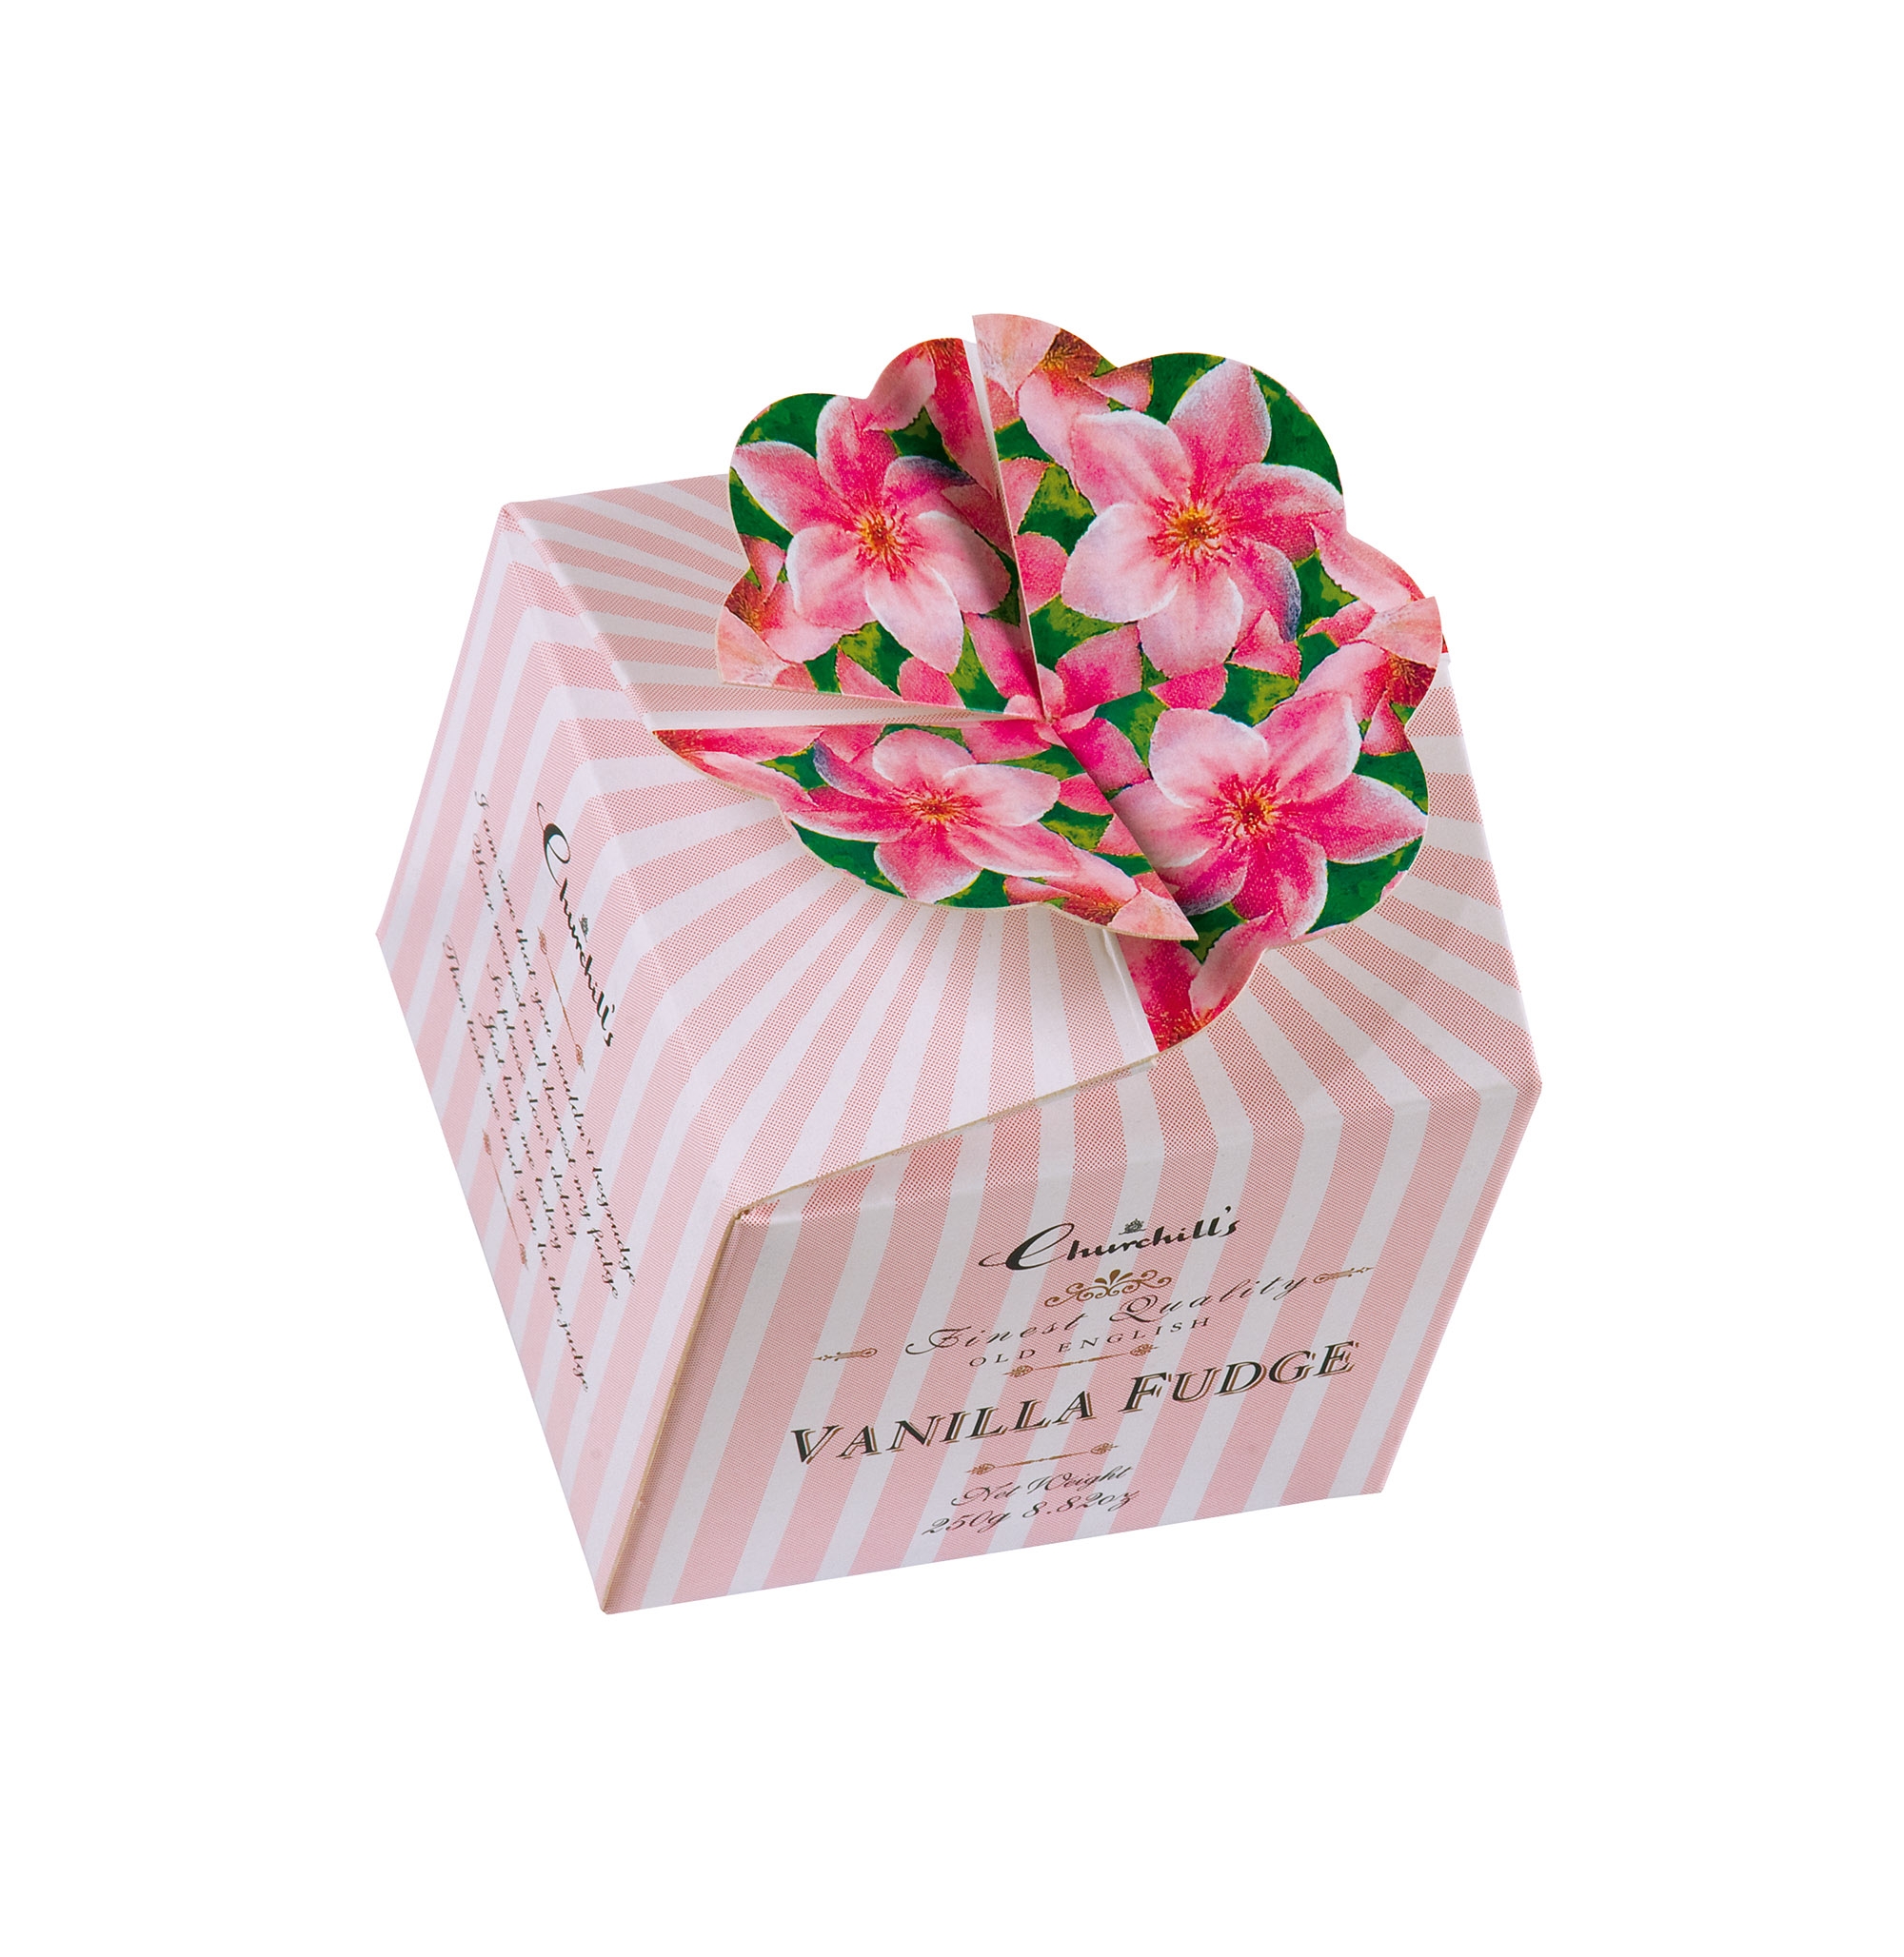 Floral Bouquet Vanilla Fudge – 250g Vanilla Fudge – Churchills Confectionary